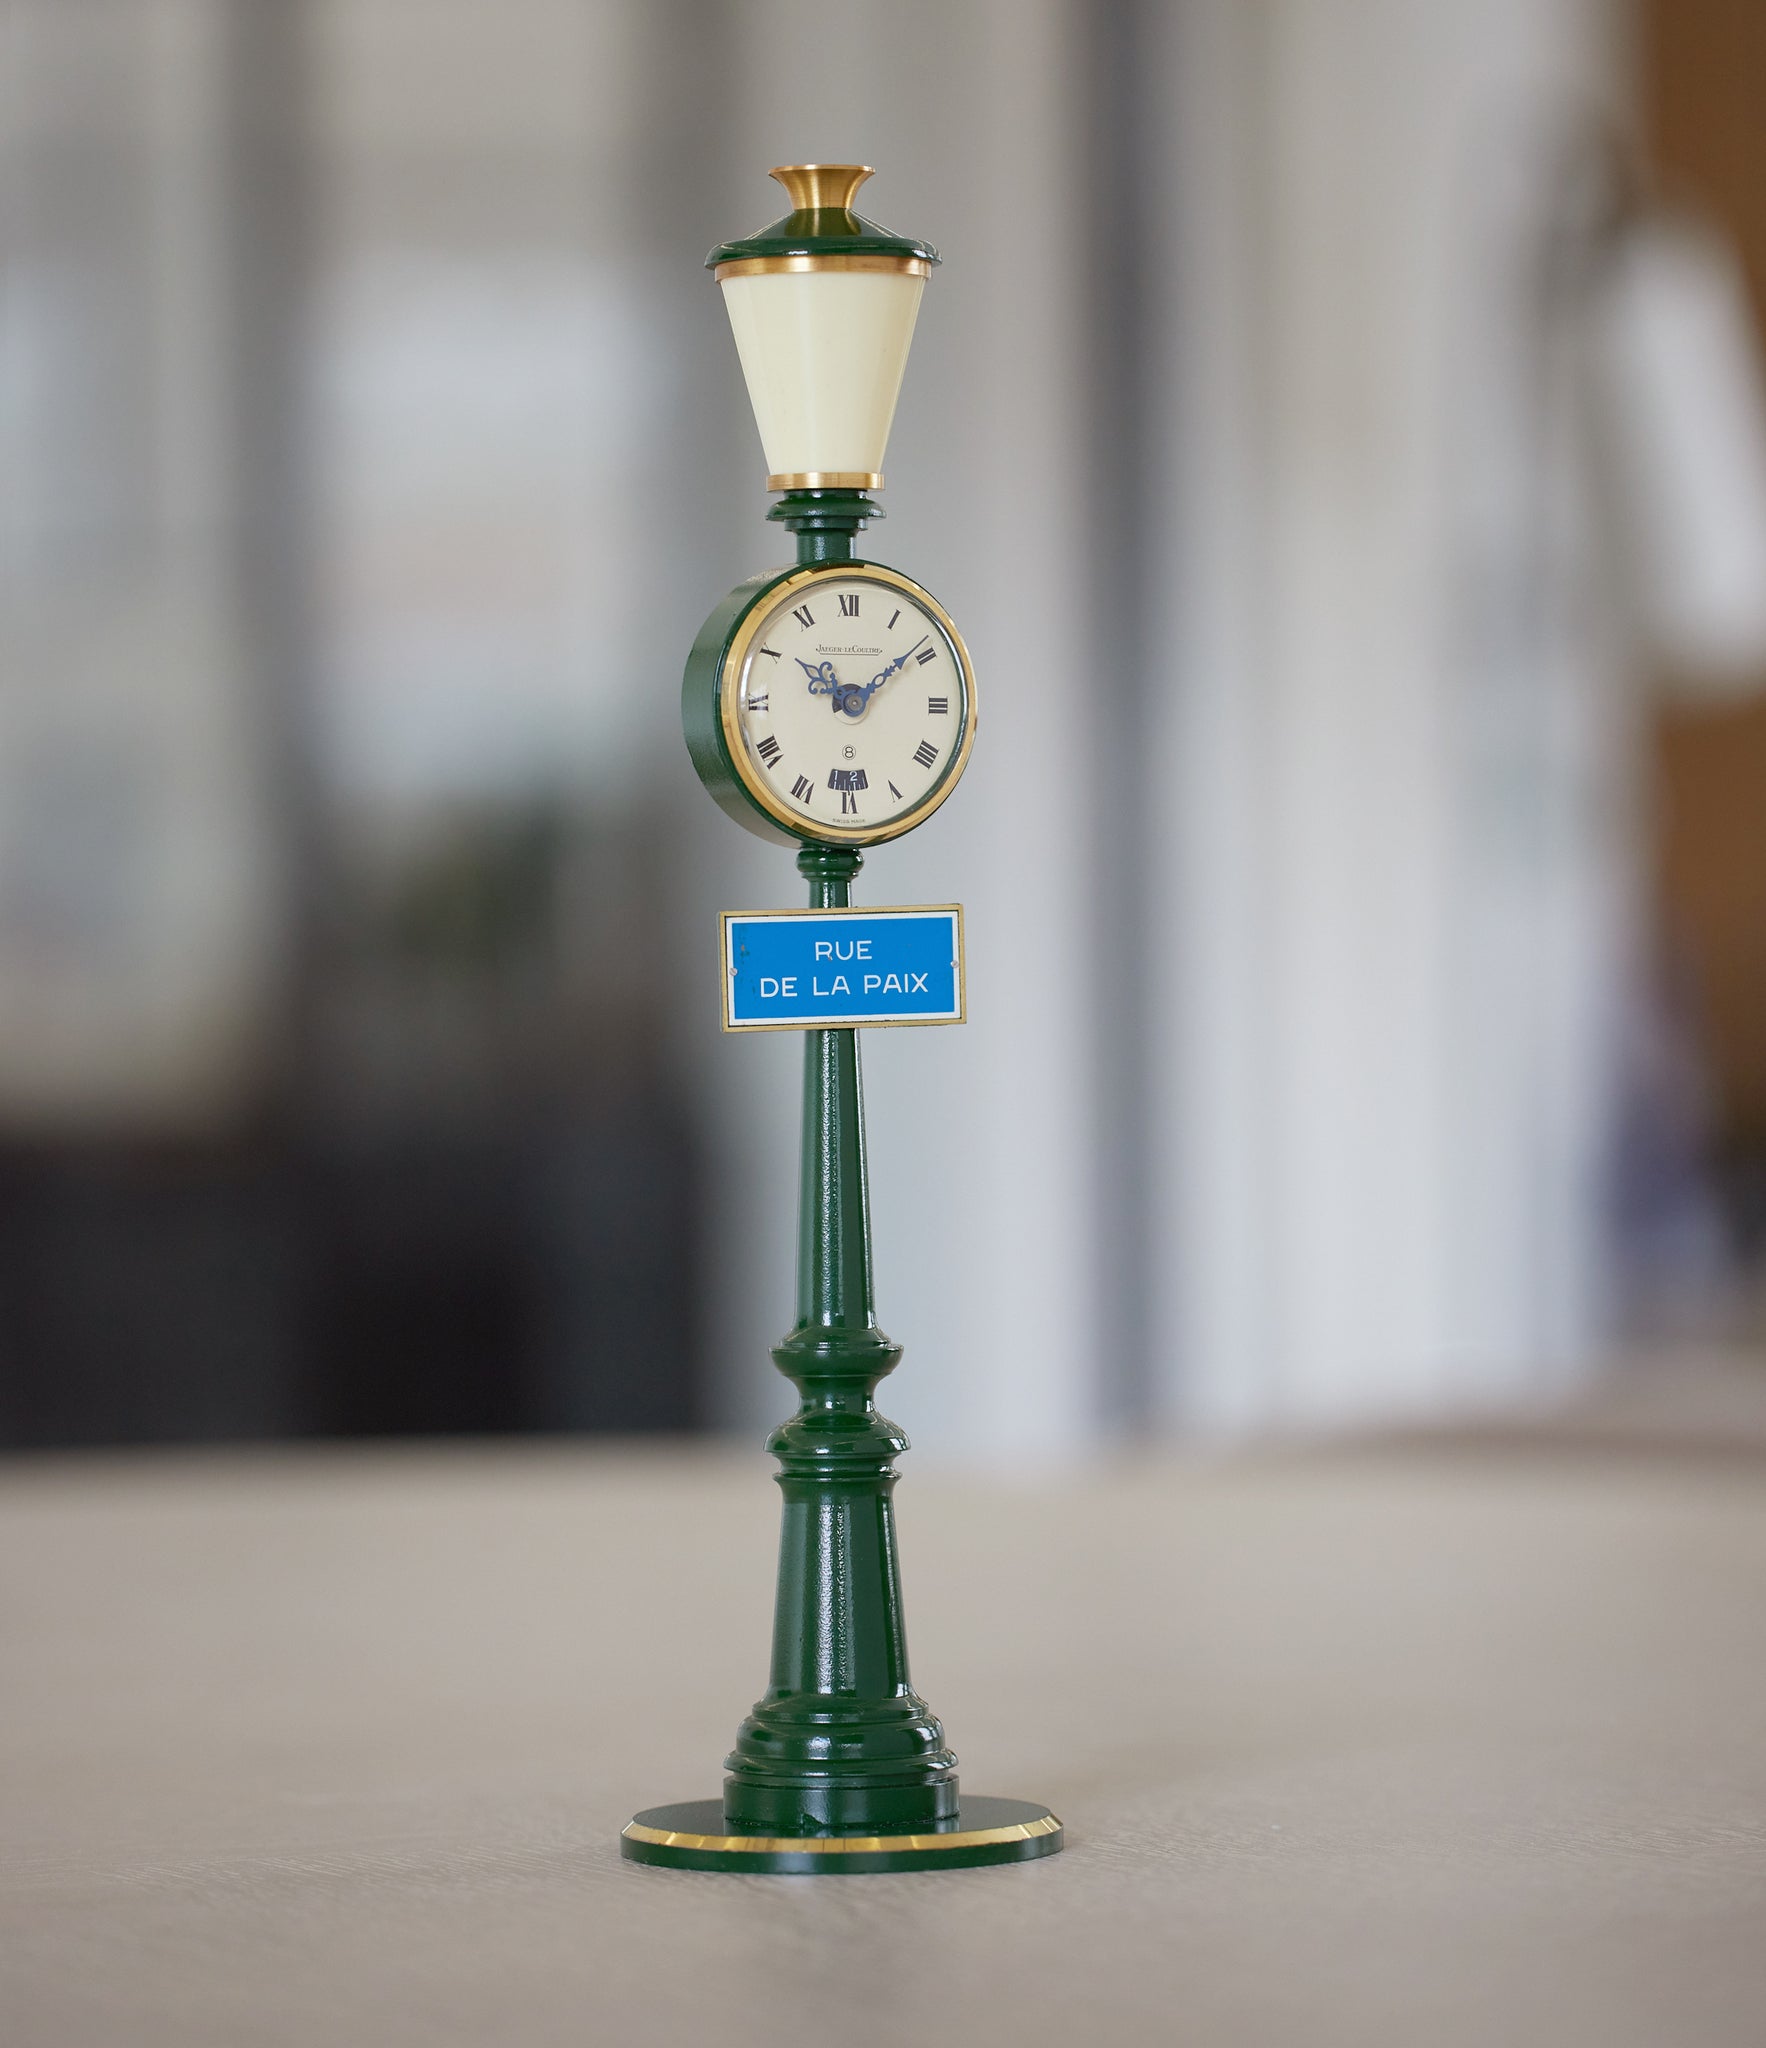 Rue de la Paix Desk Clock with 24-hour Alarm, British Racing Green